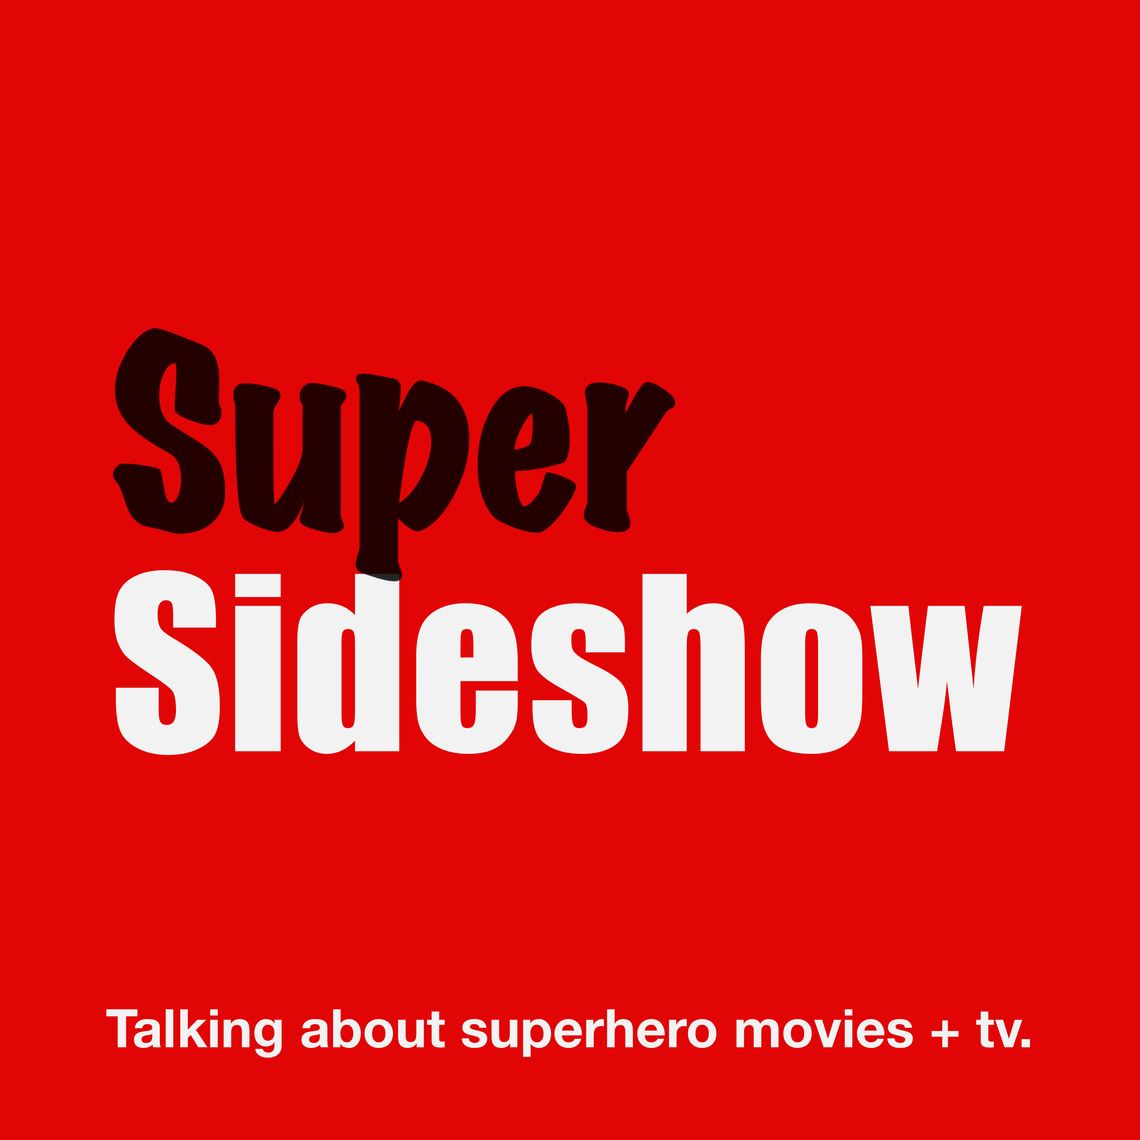 X-Men: Dark Phoenix (147)  Super Sideshow - superhero movies and shows  Podcast